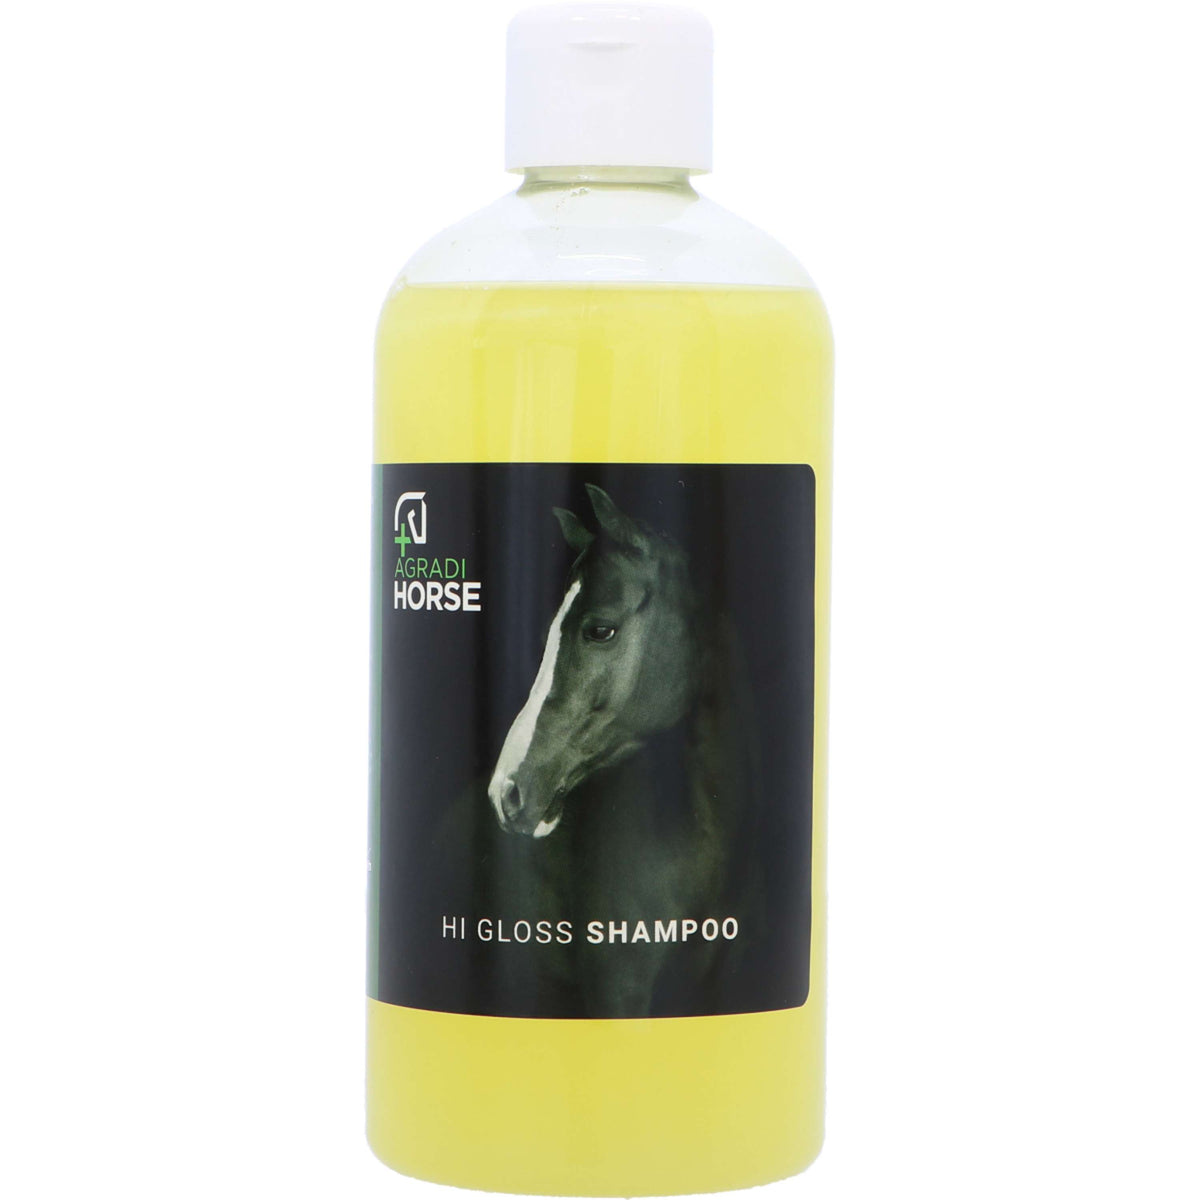 Agradi Horse Hi Gloss Shampoo